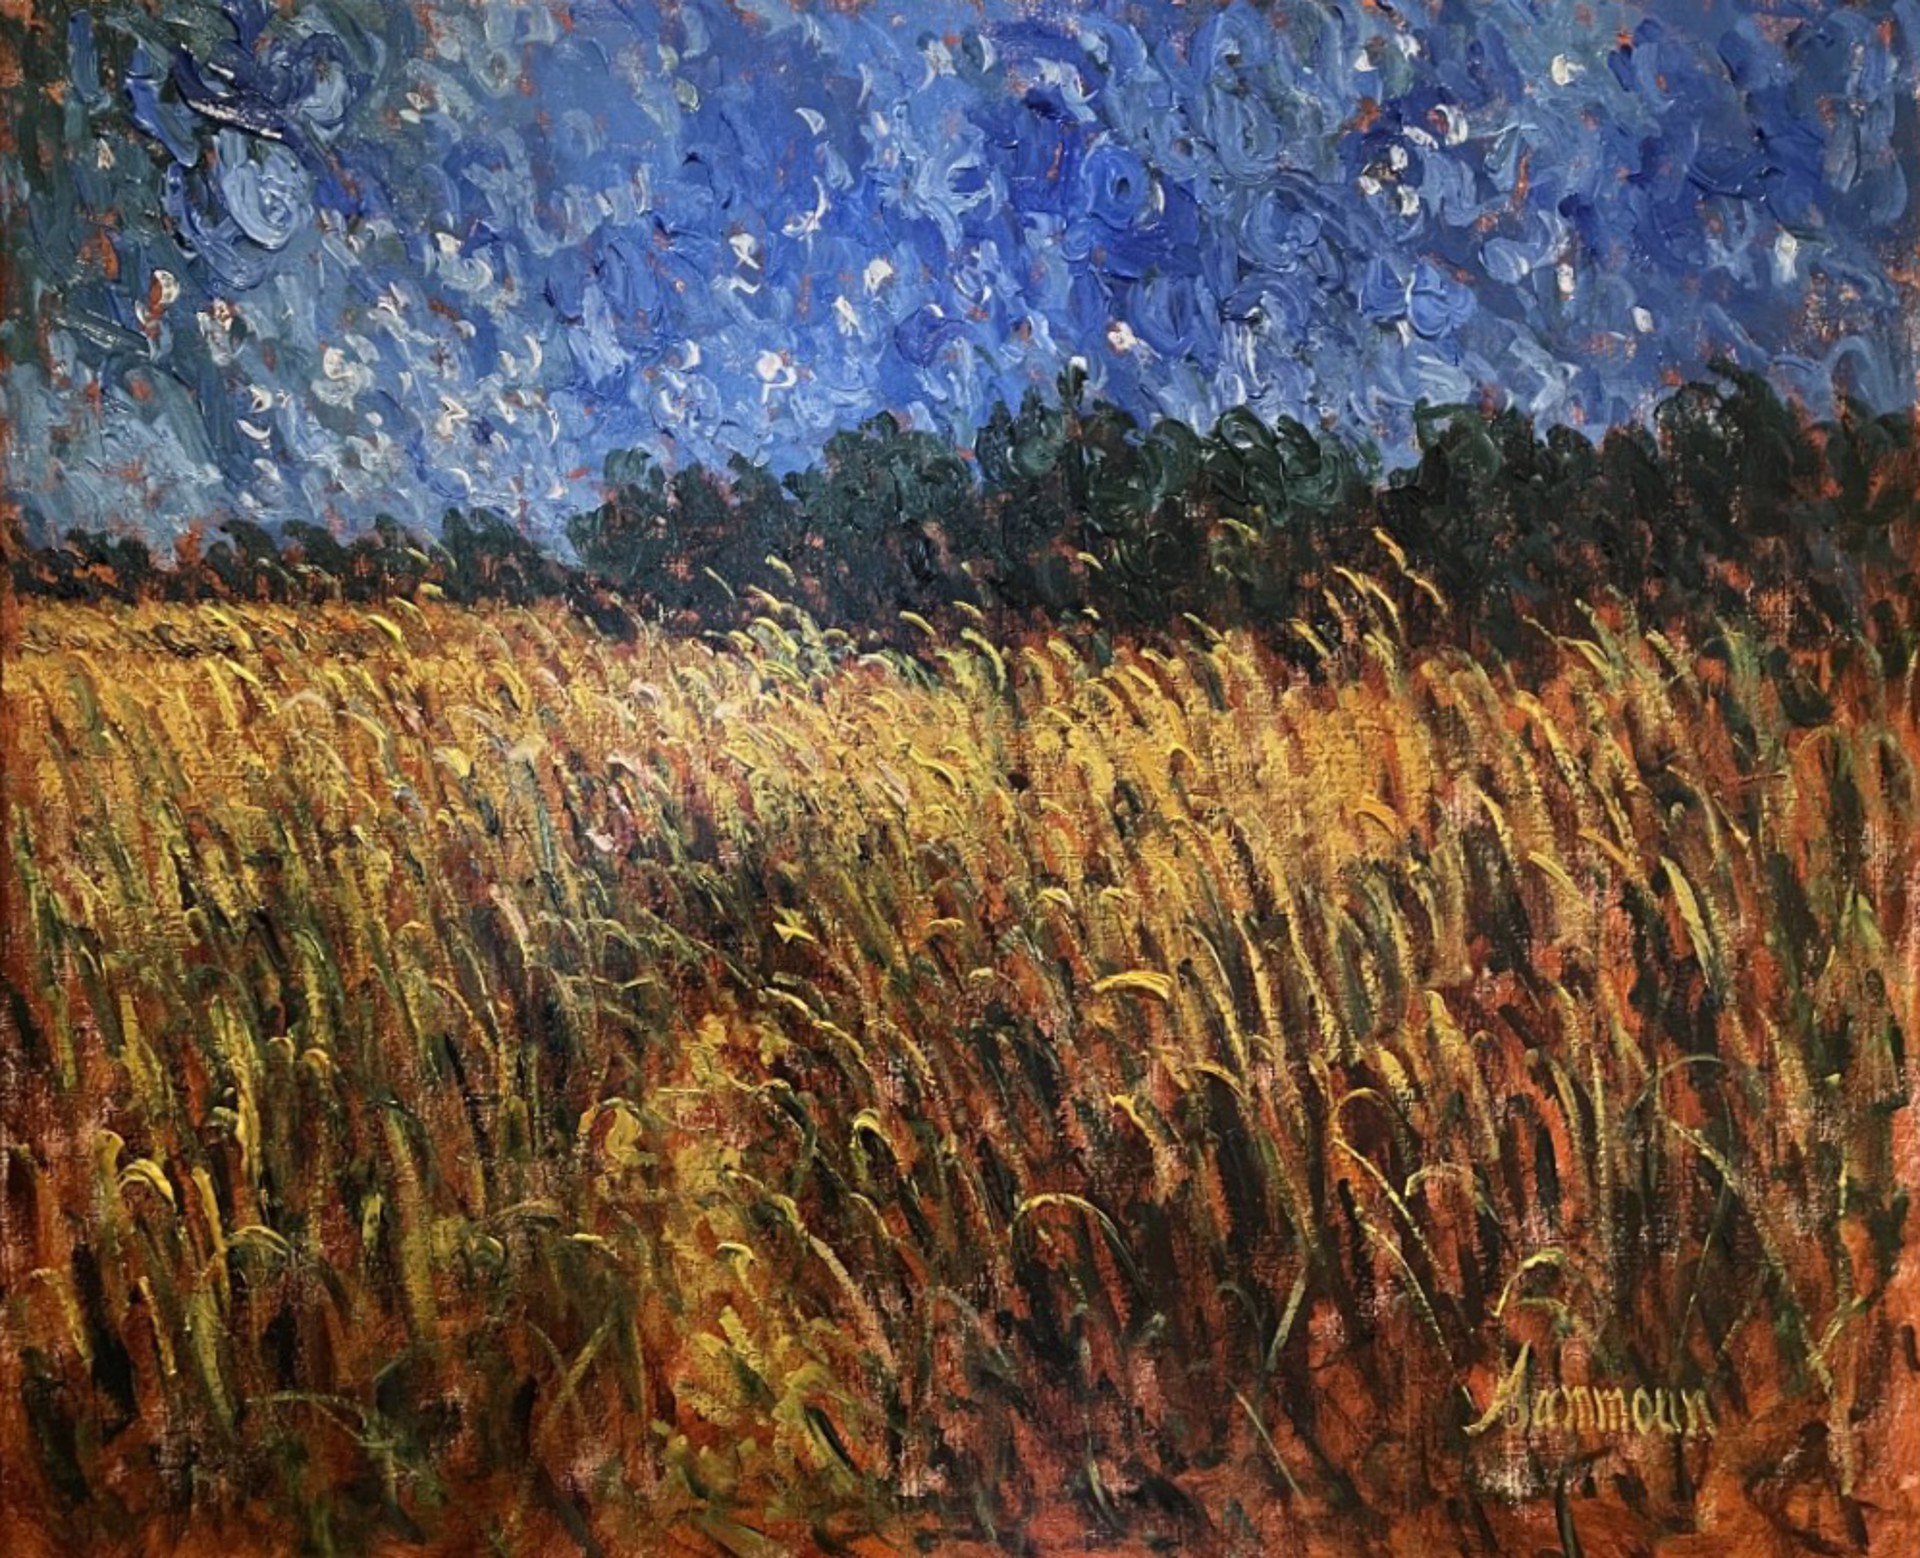 Wheat field, Starry Night II by Samir Sammoun